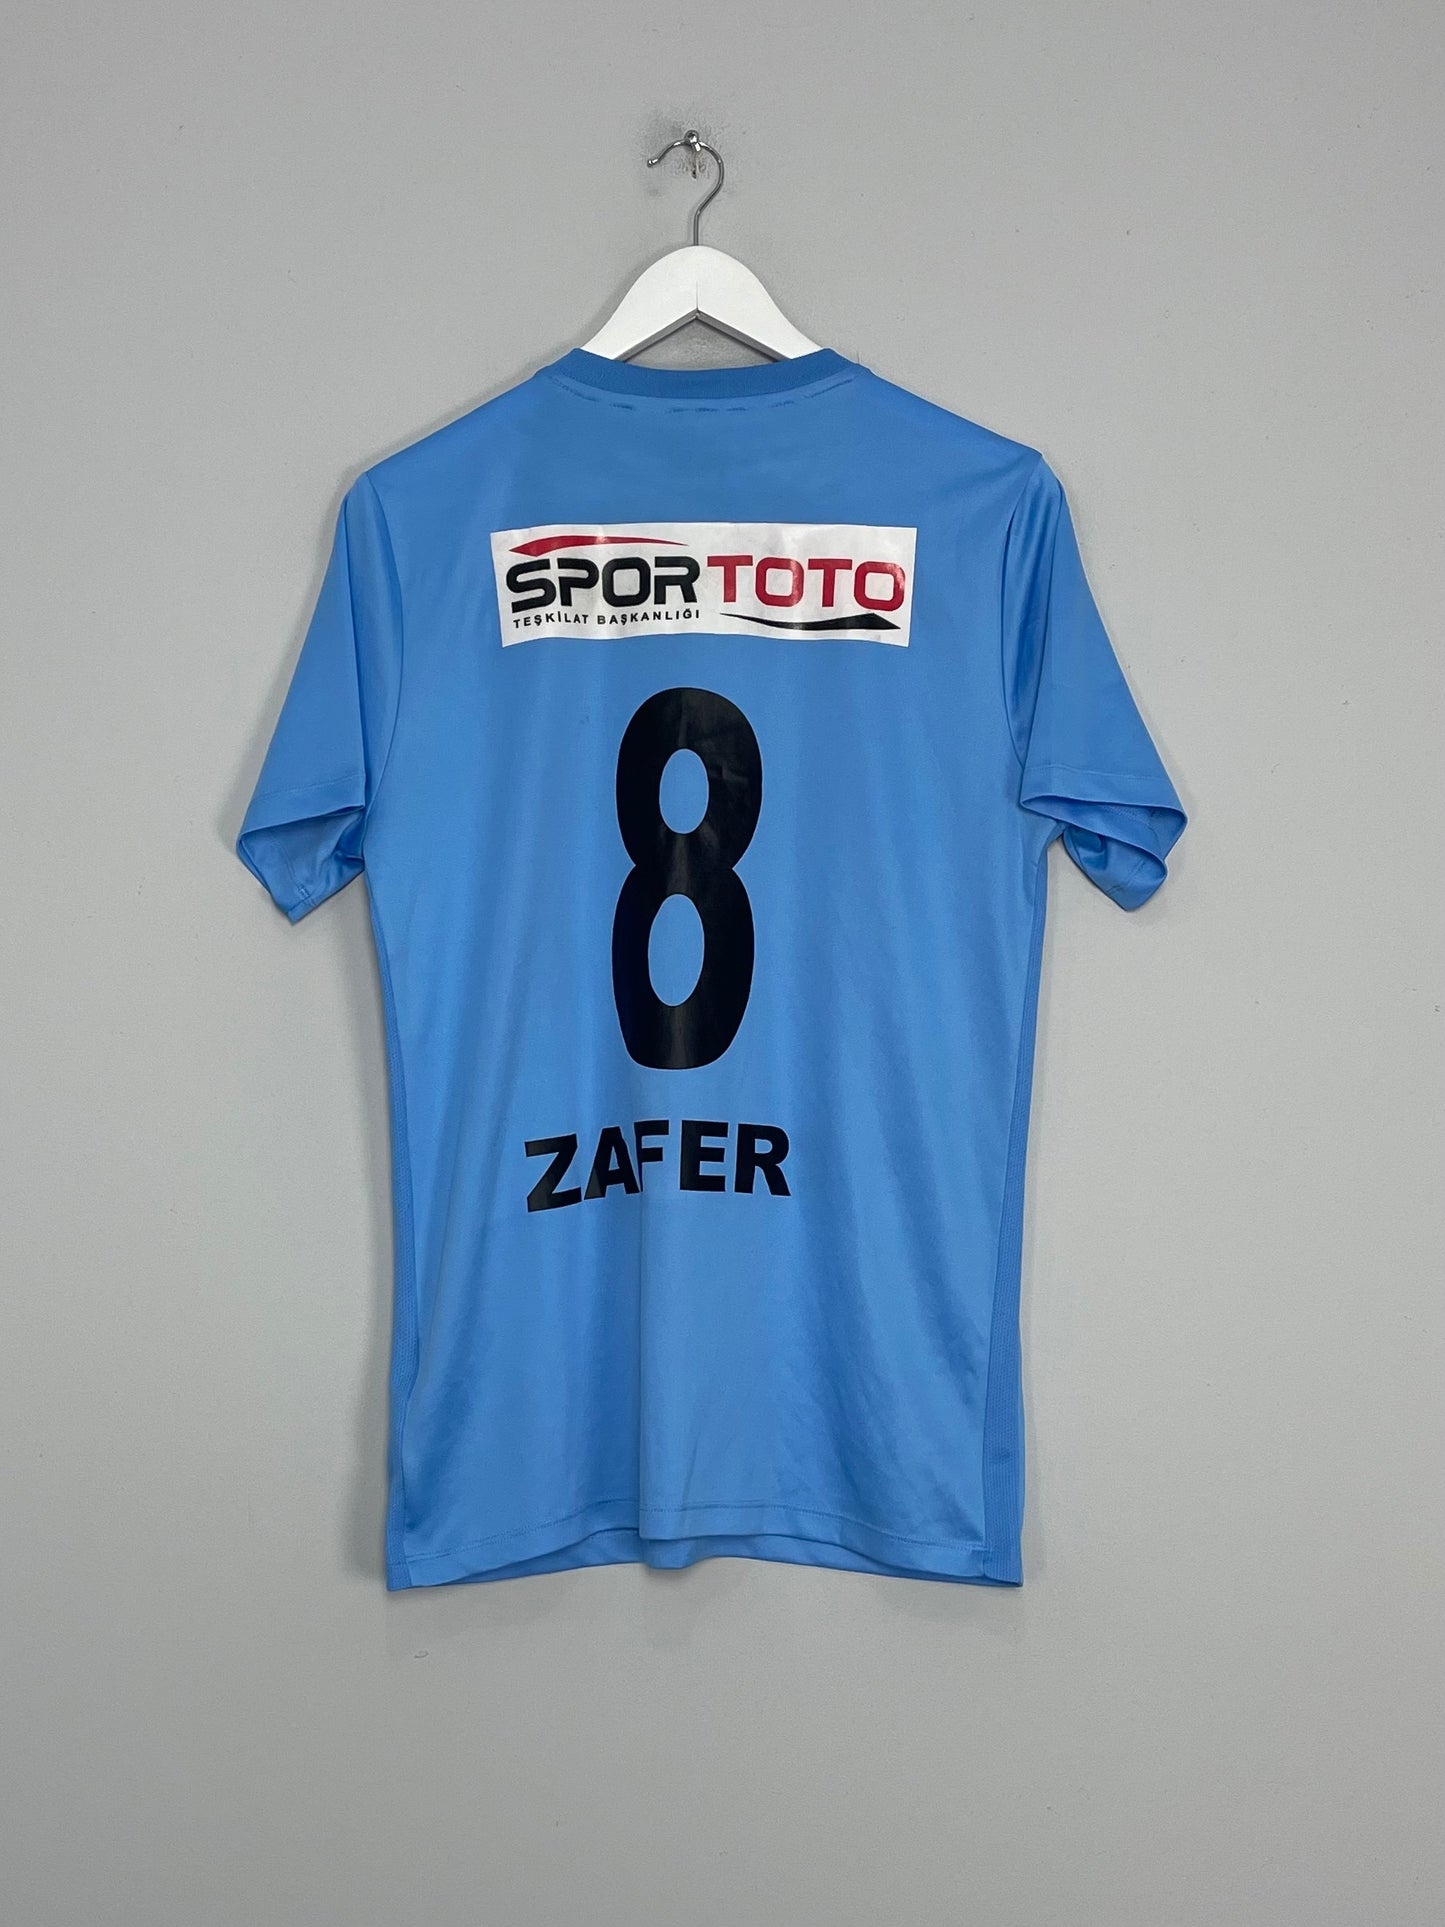 Image of the Yomraspor Zafer shirt from the 2010/11 season